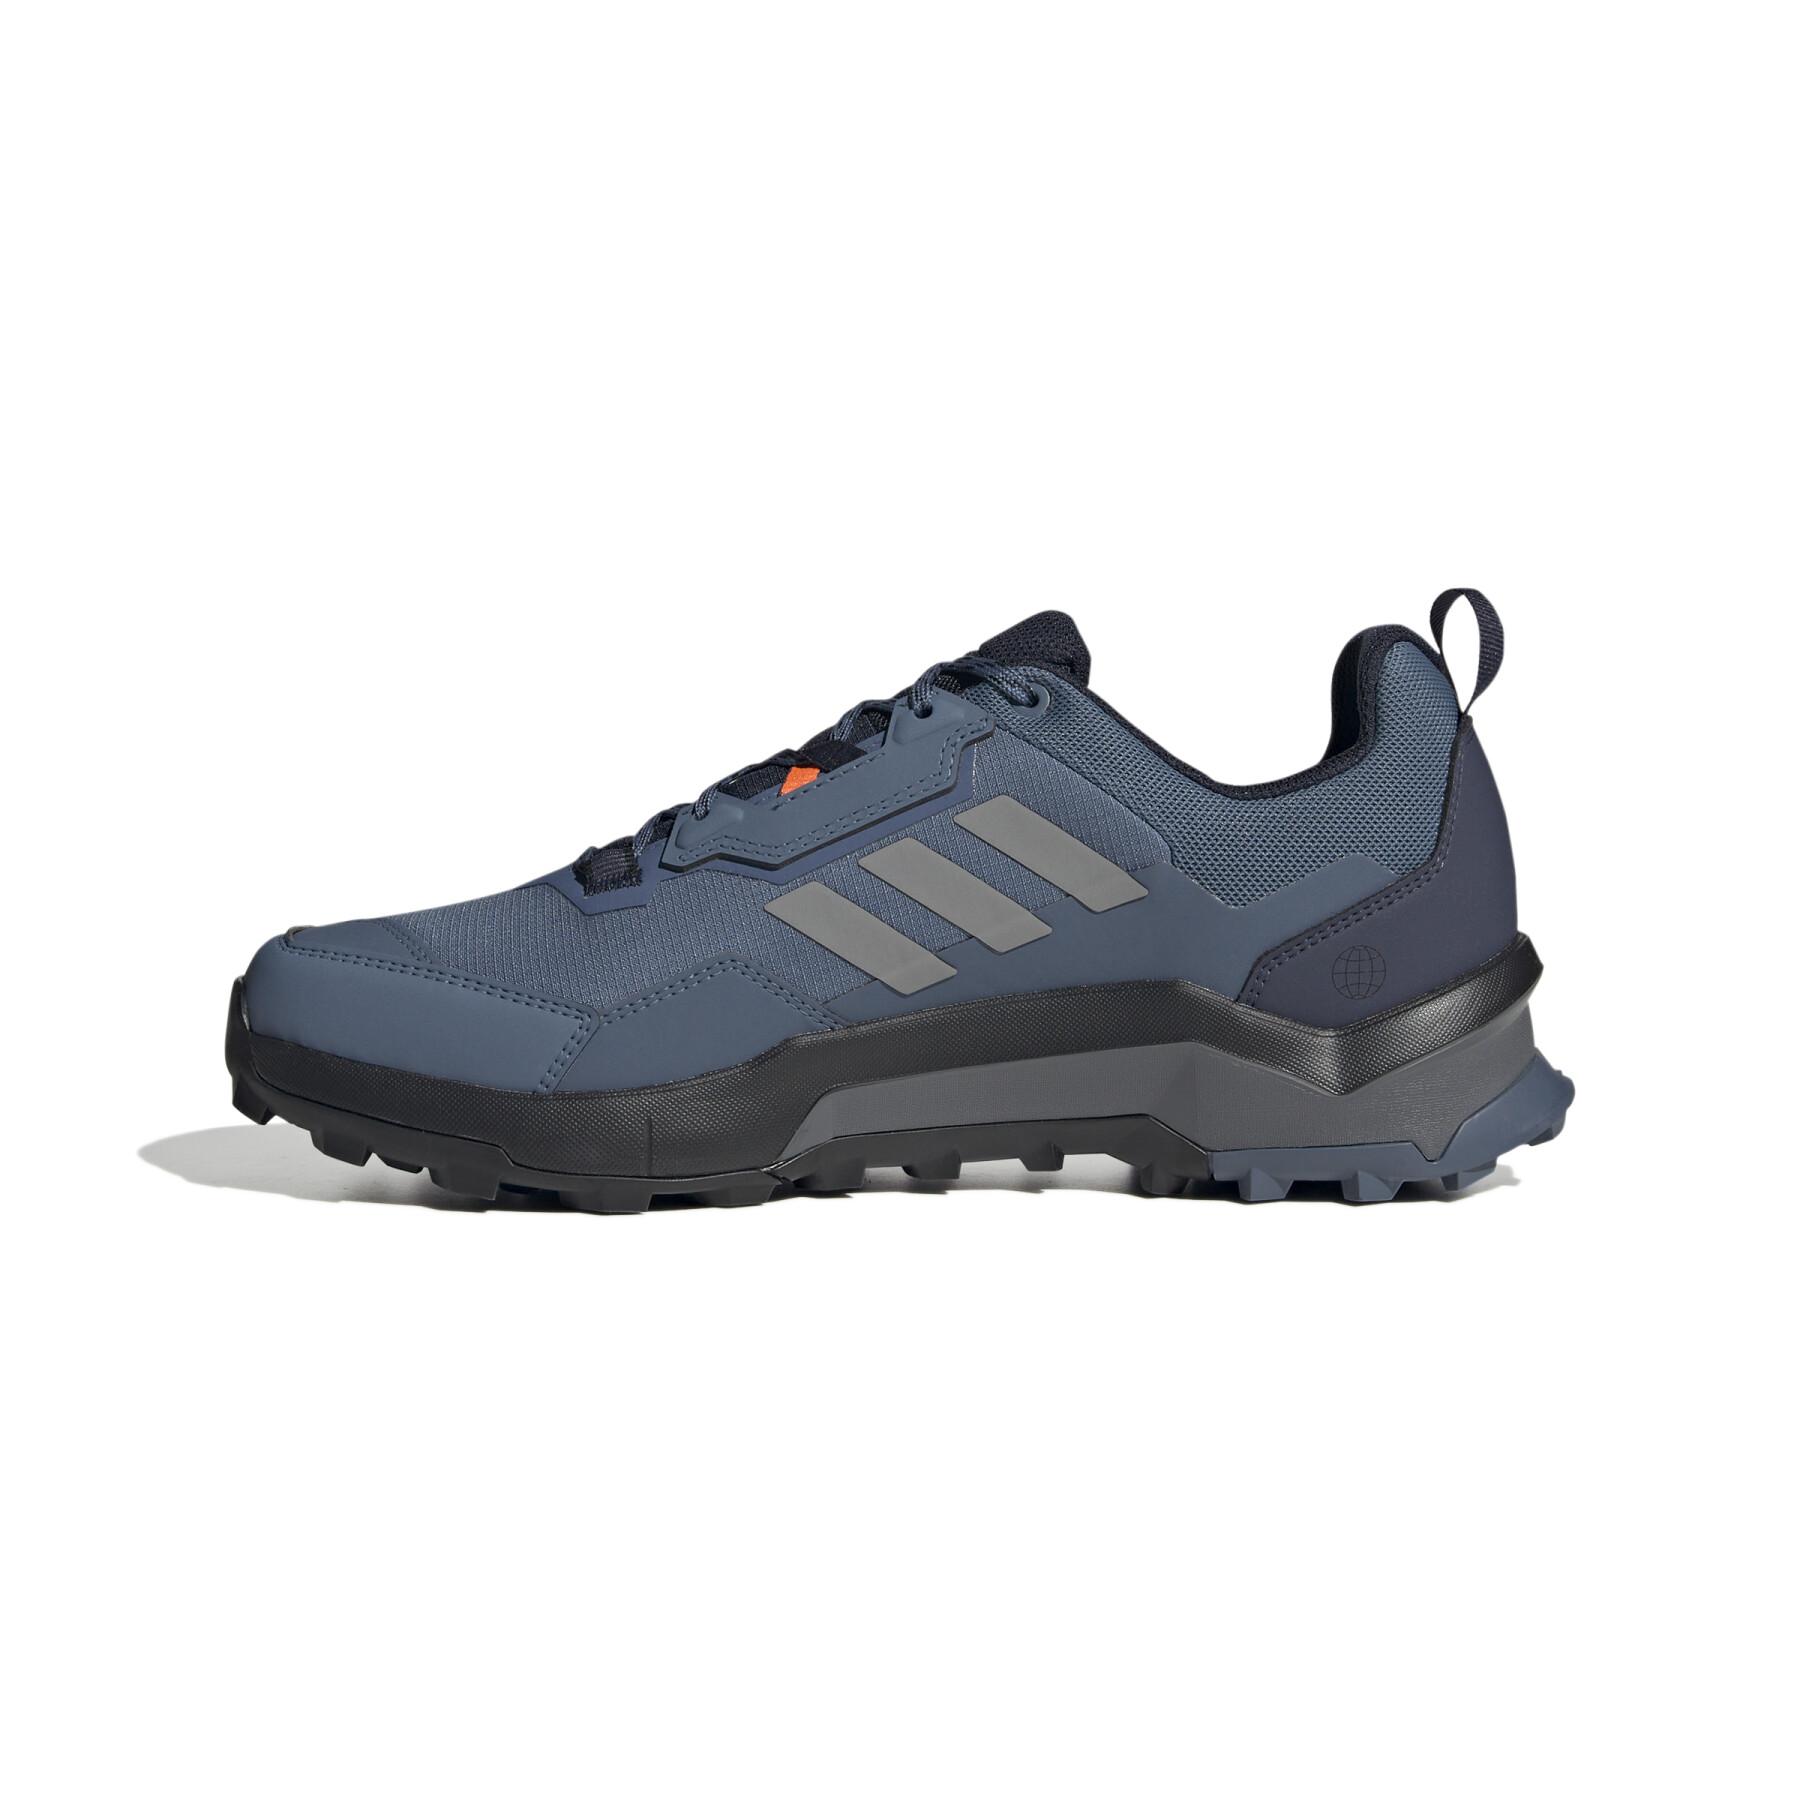 Hiking shoes adidas Terrex Ax4 Gtx - Low shoes - Hiking Shoes - Hiking